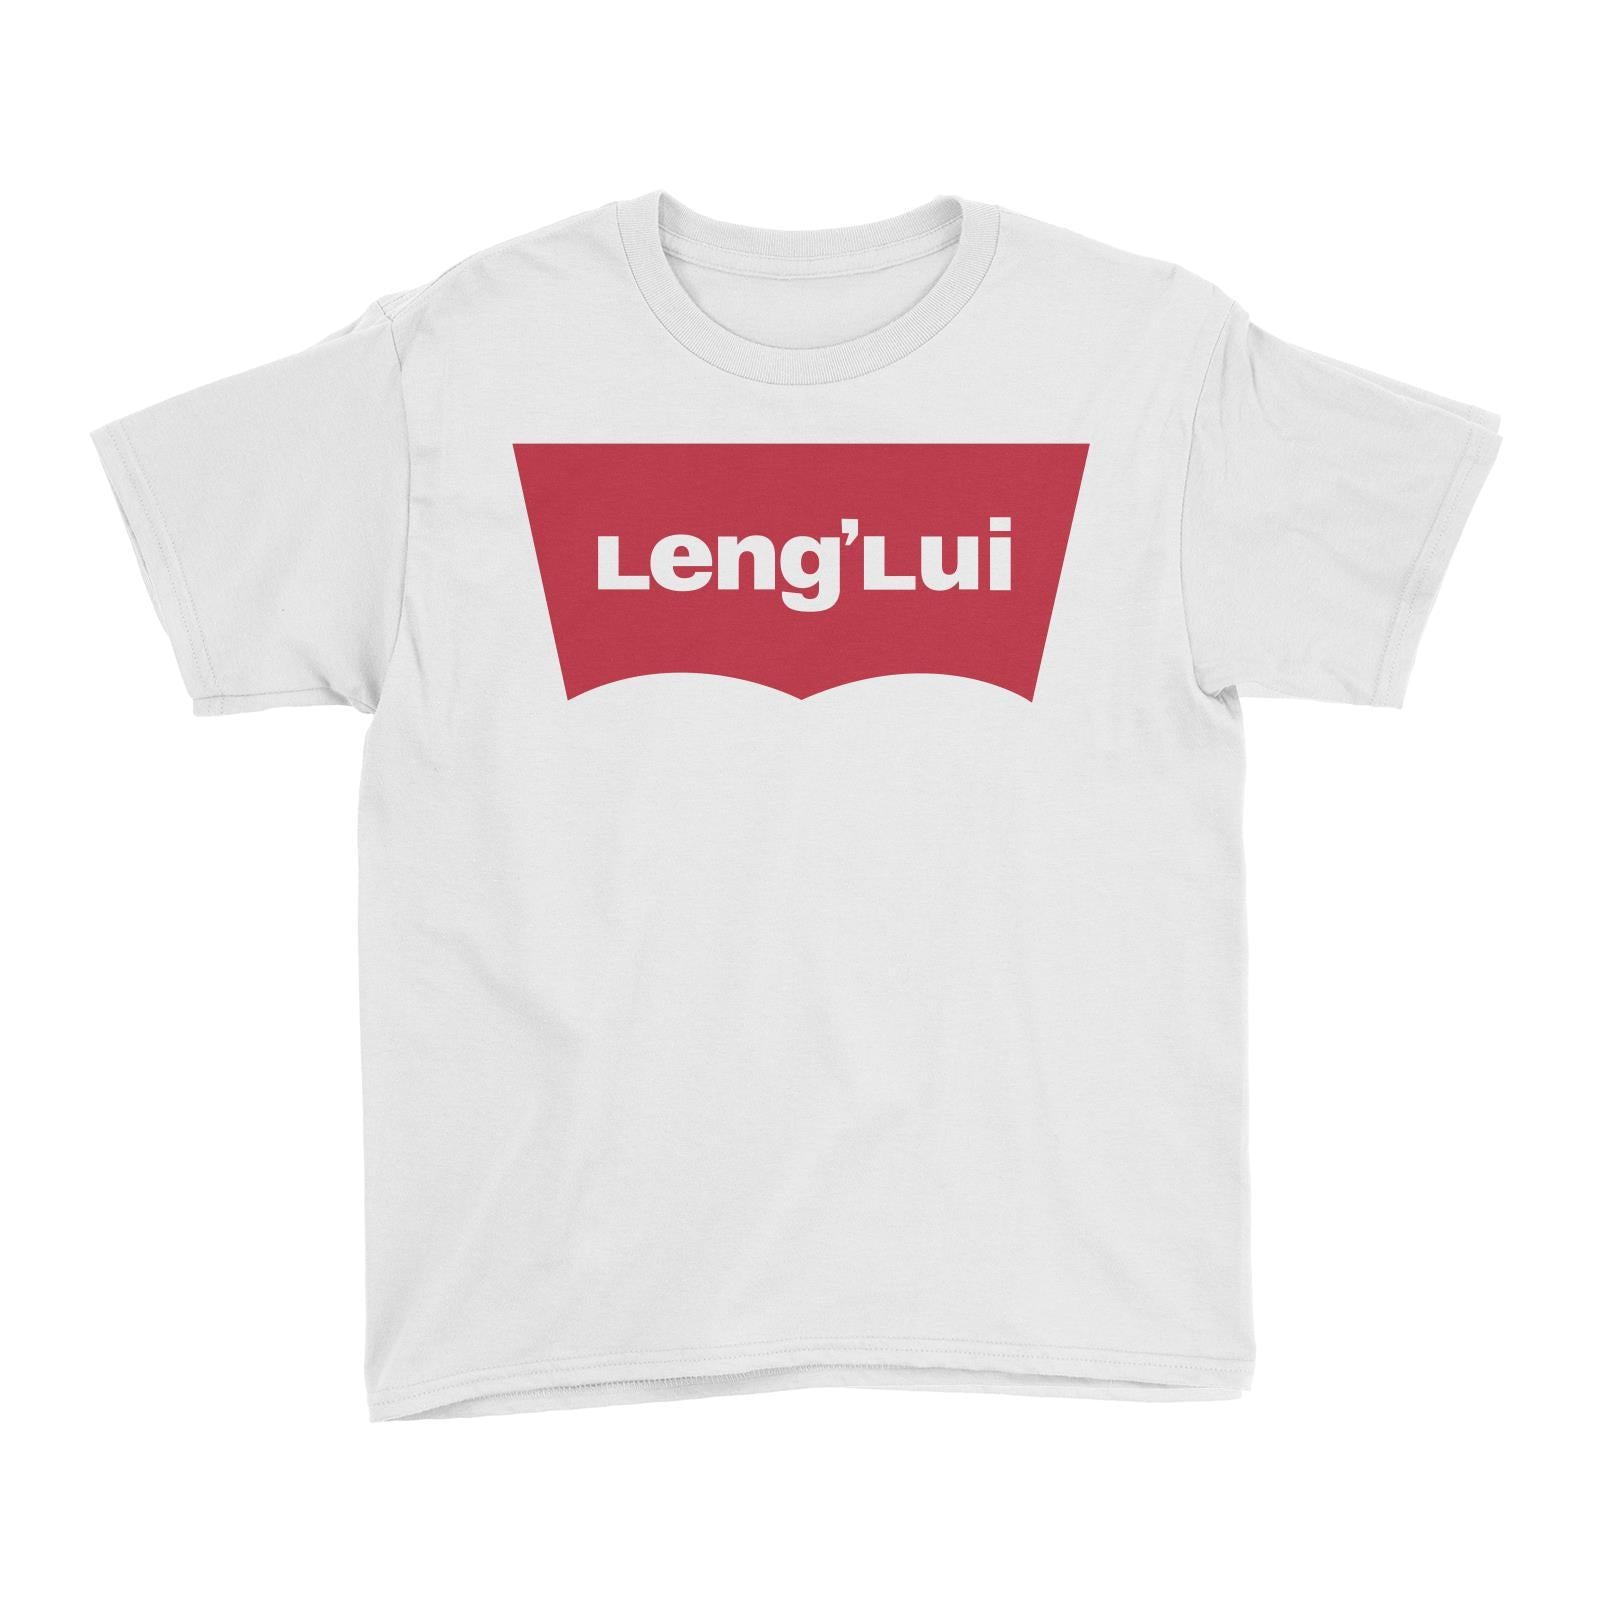 Slang Statement Lenglui Kid's T-Shirt